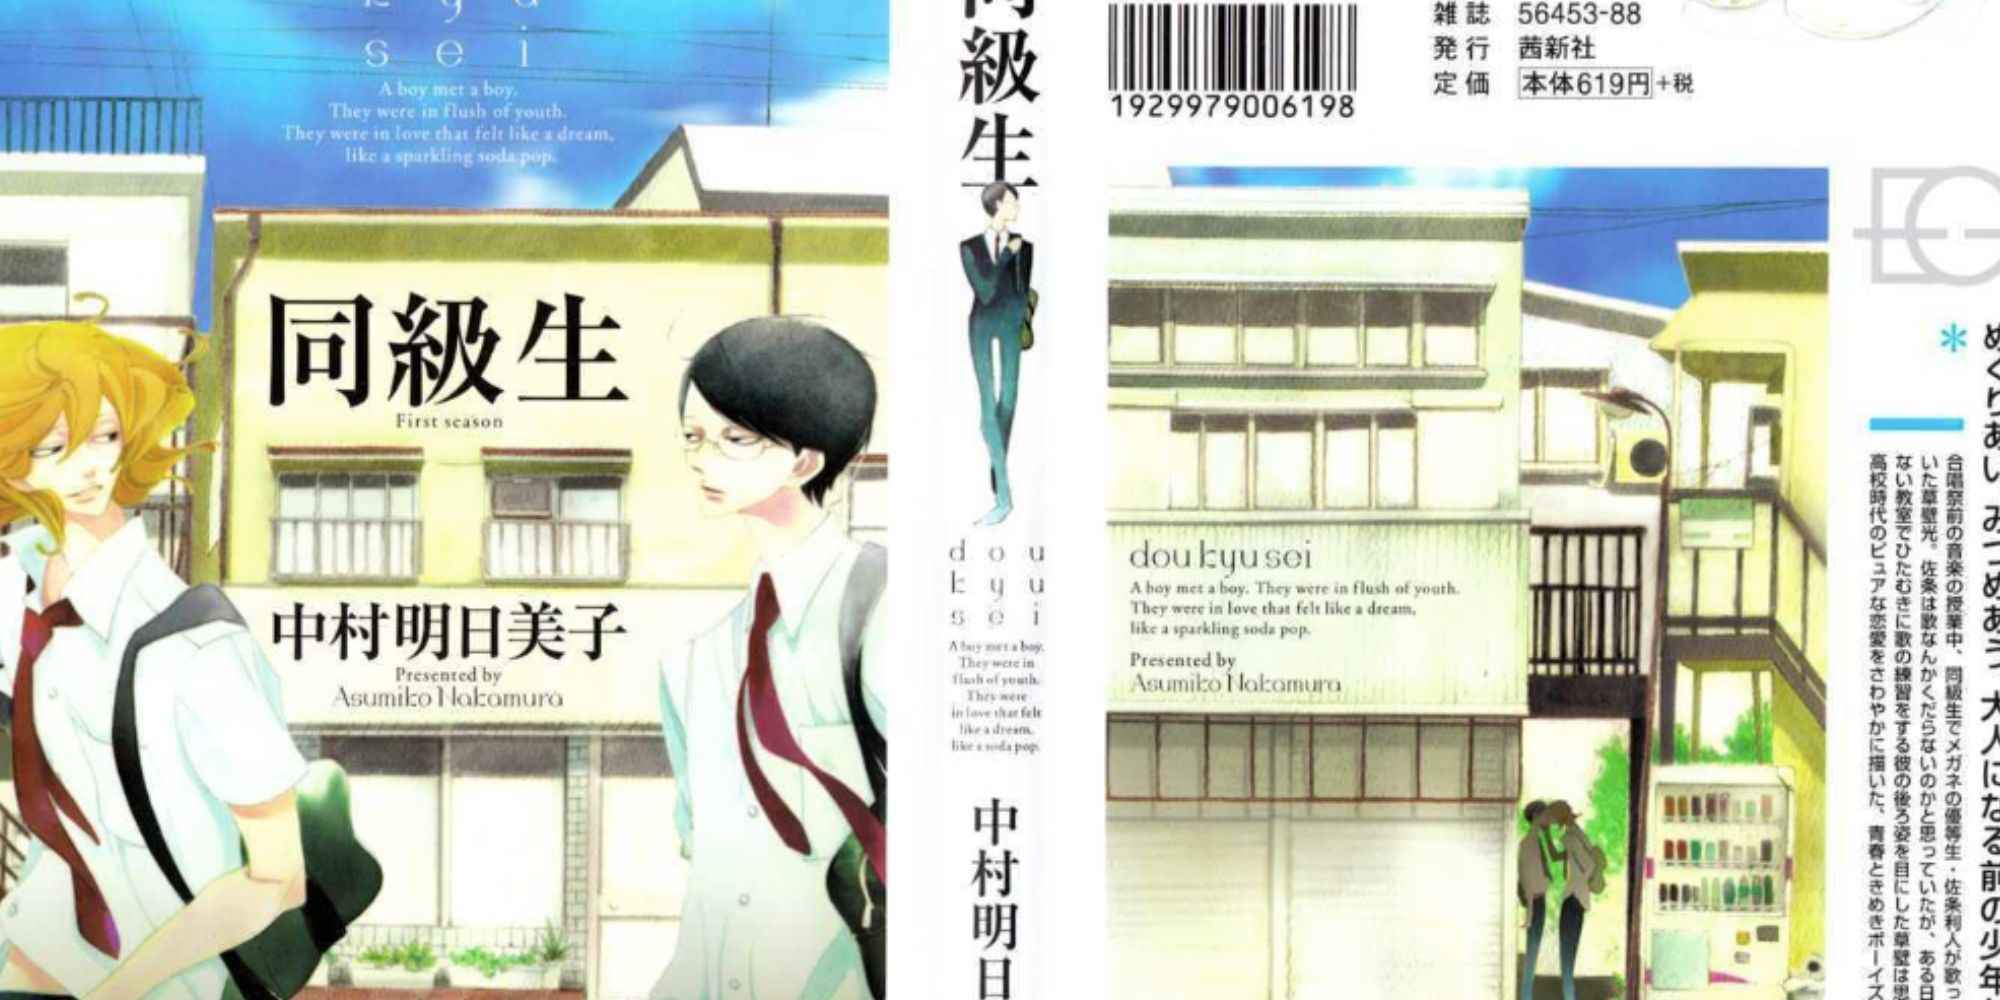 doukyusei manga cover and back